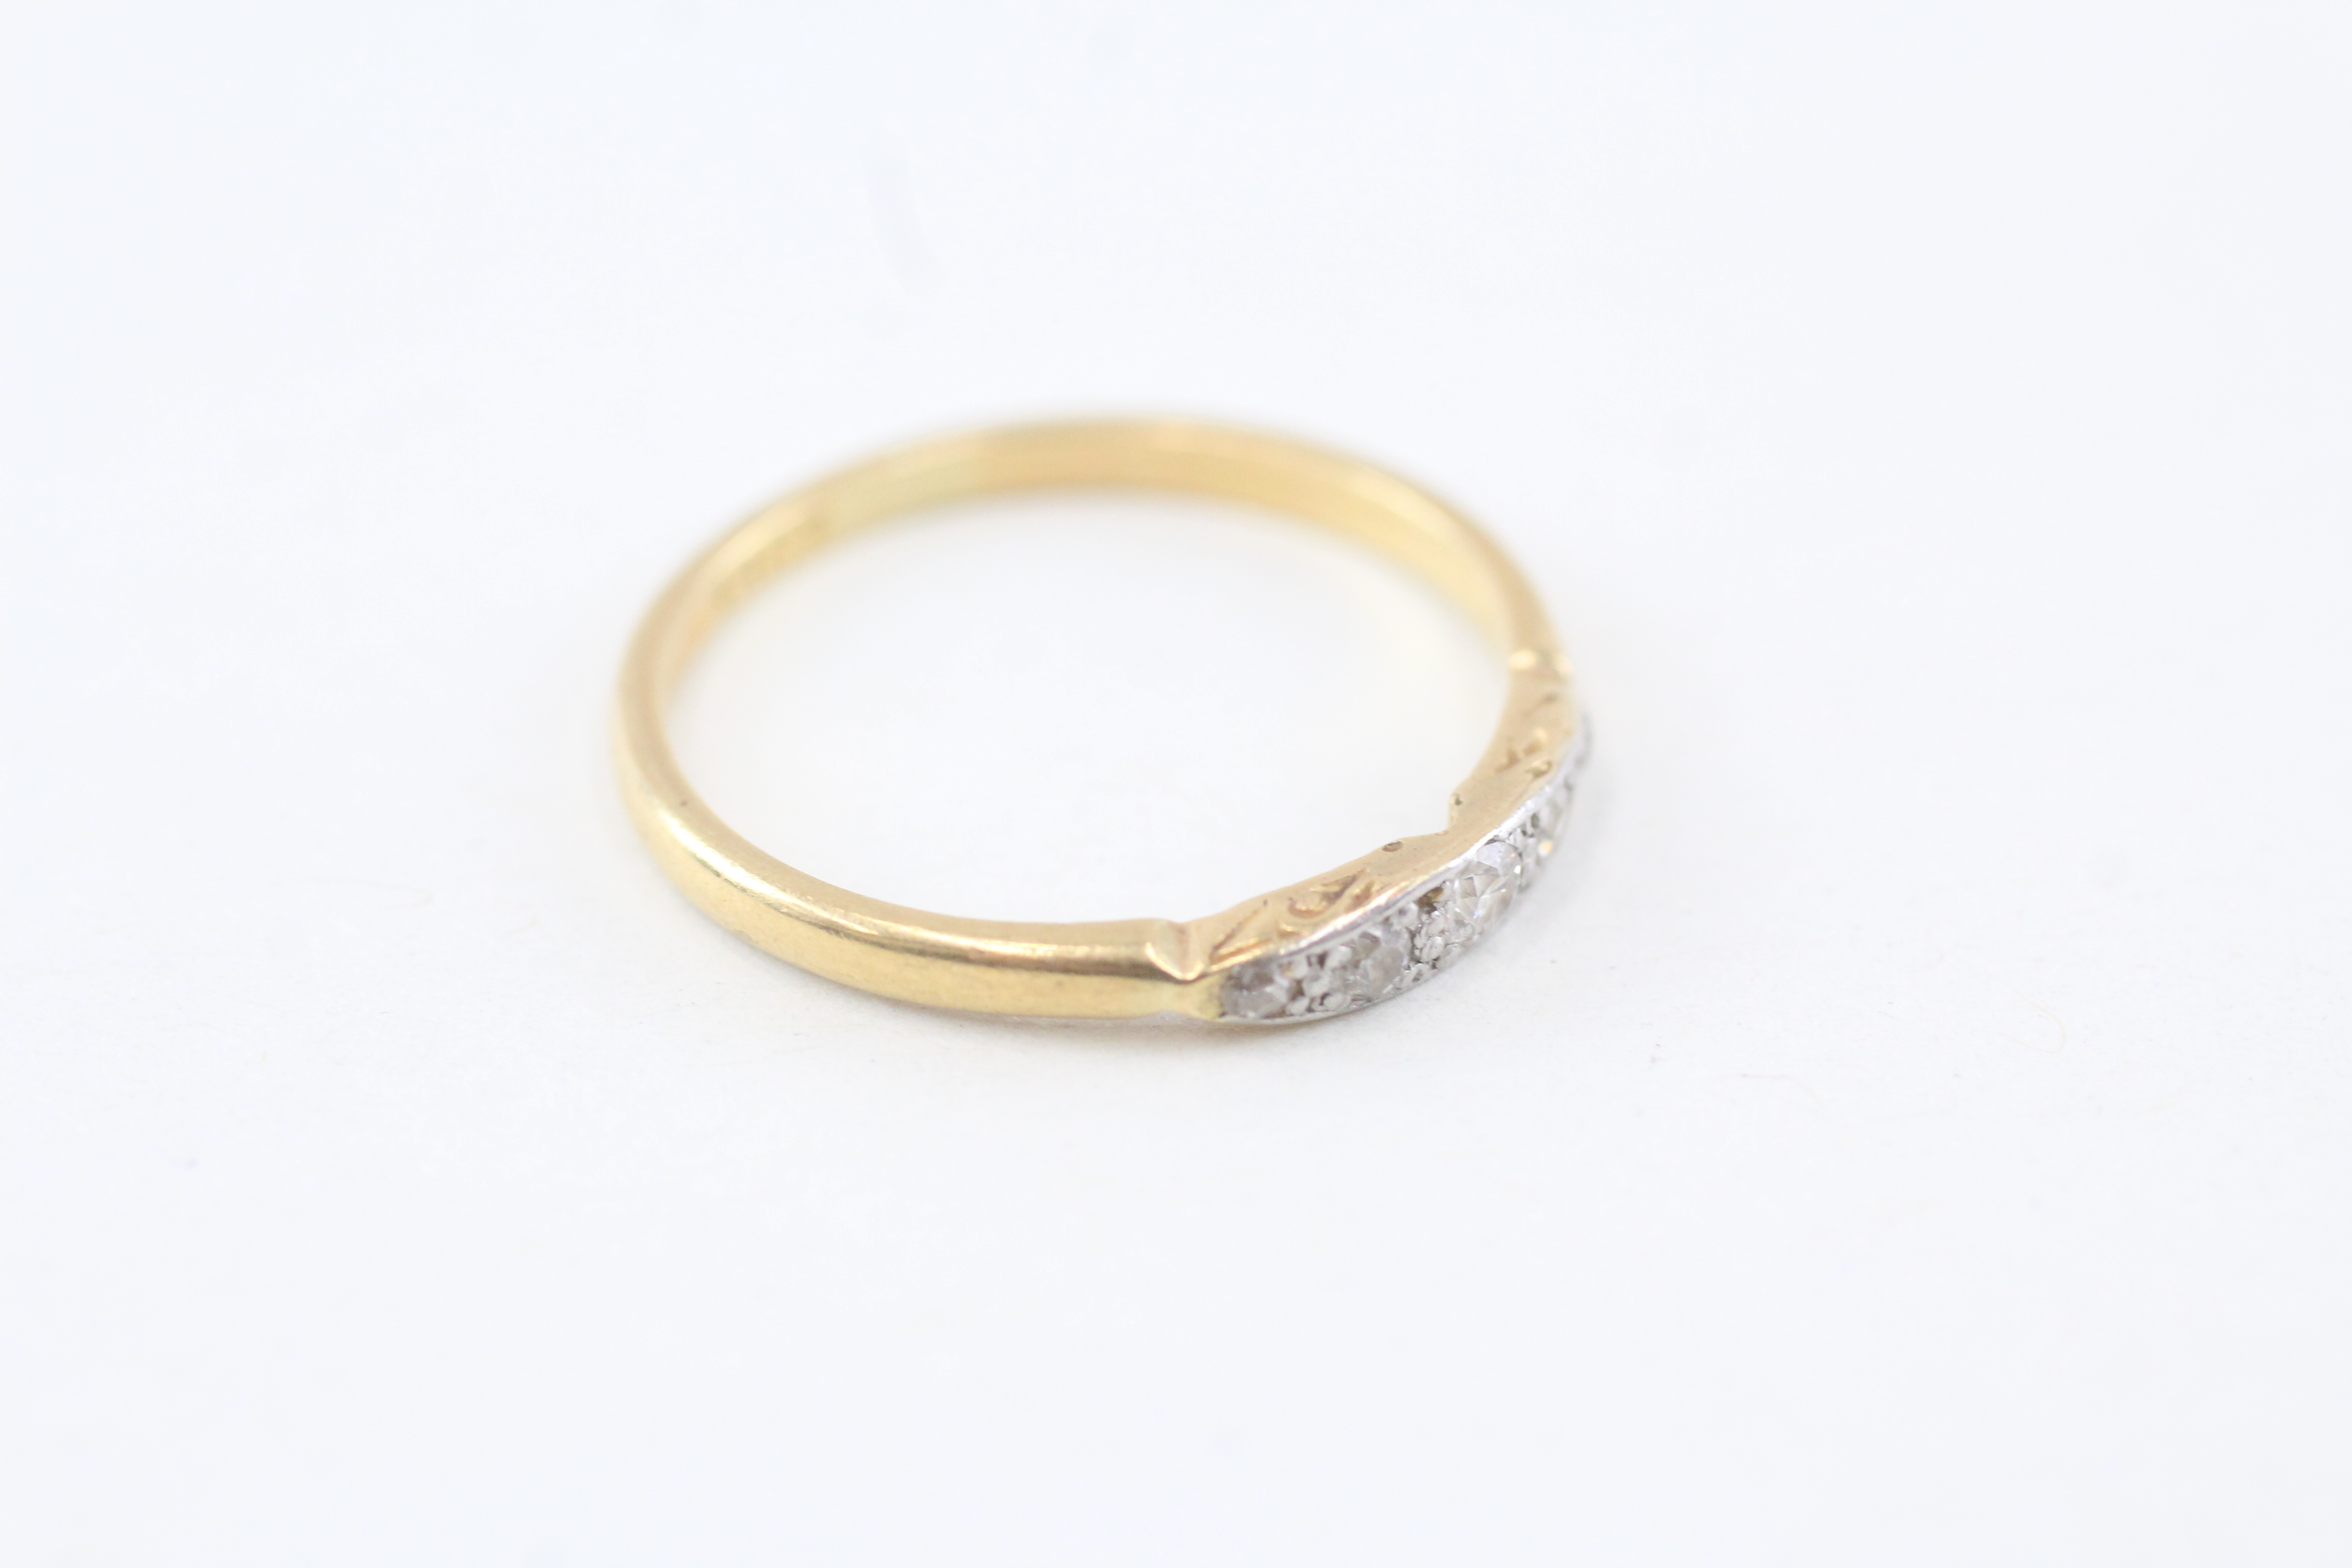 18ct gold single cut diamond five stone ring Size P - 2 g - Image 4 of 4